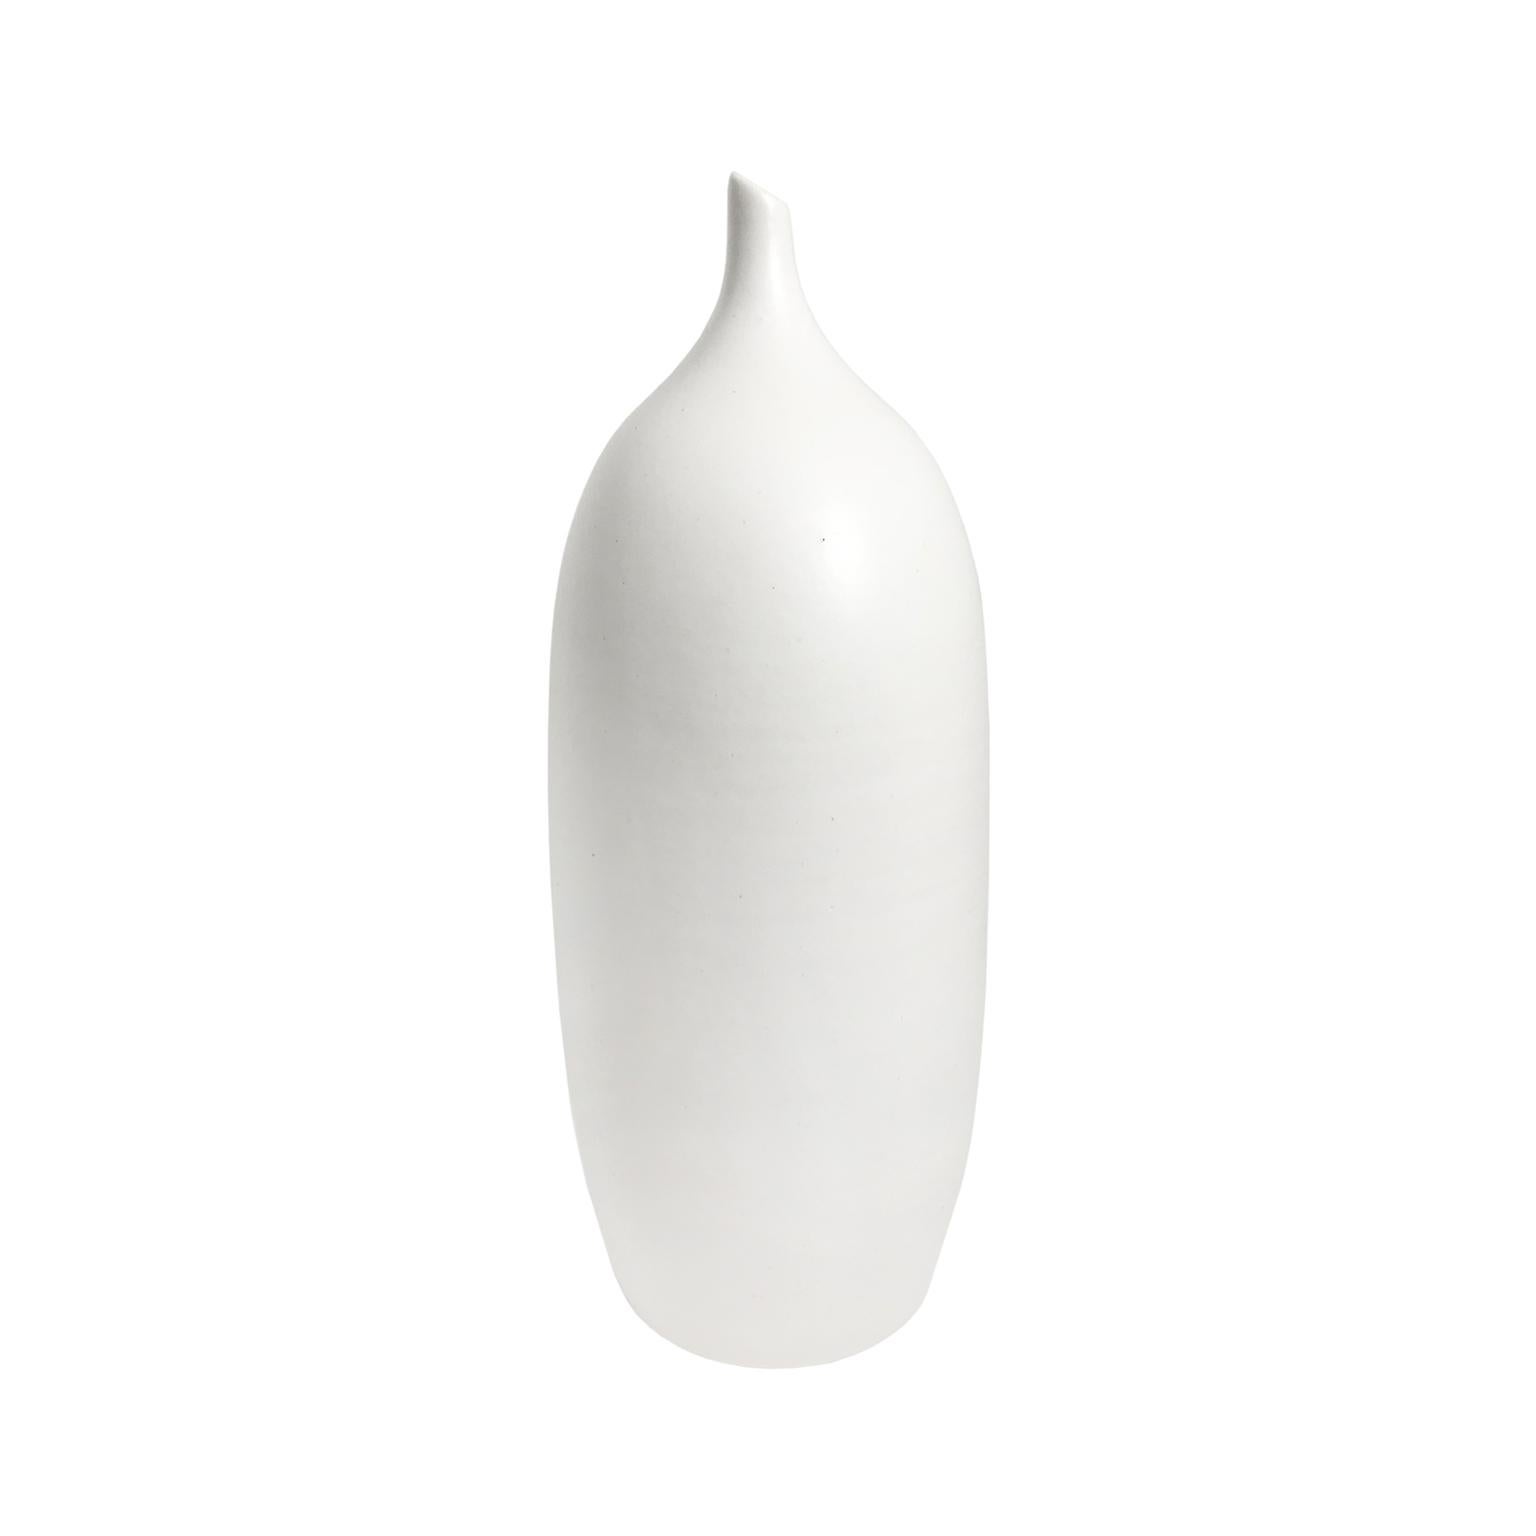 Alabaster Glaze Ceramic Bottle #4 by Sandi Fellman